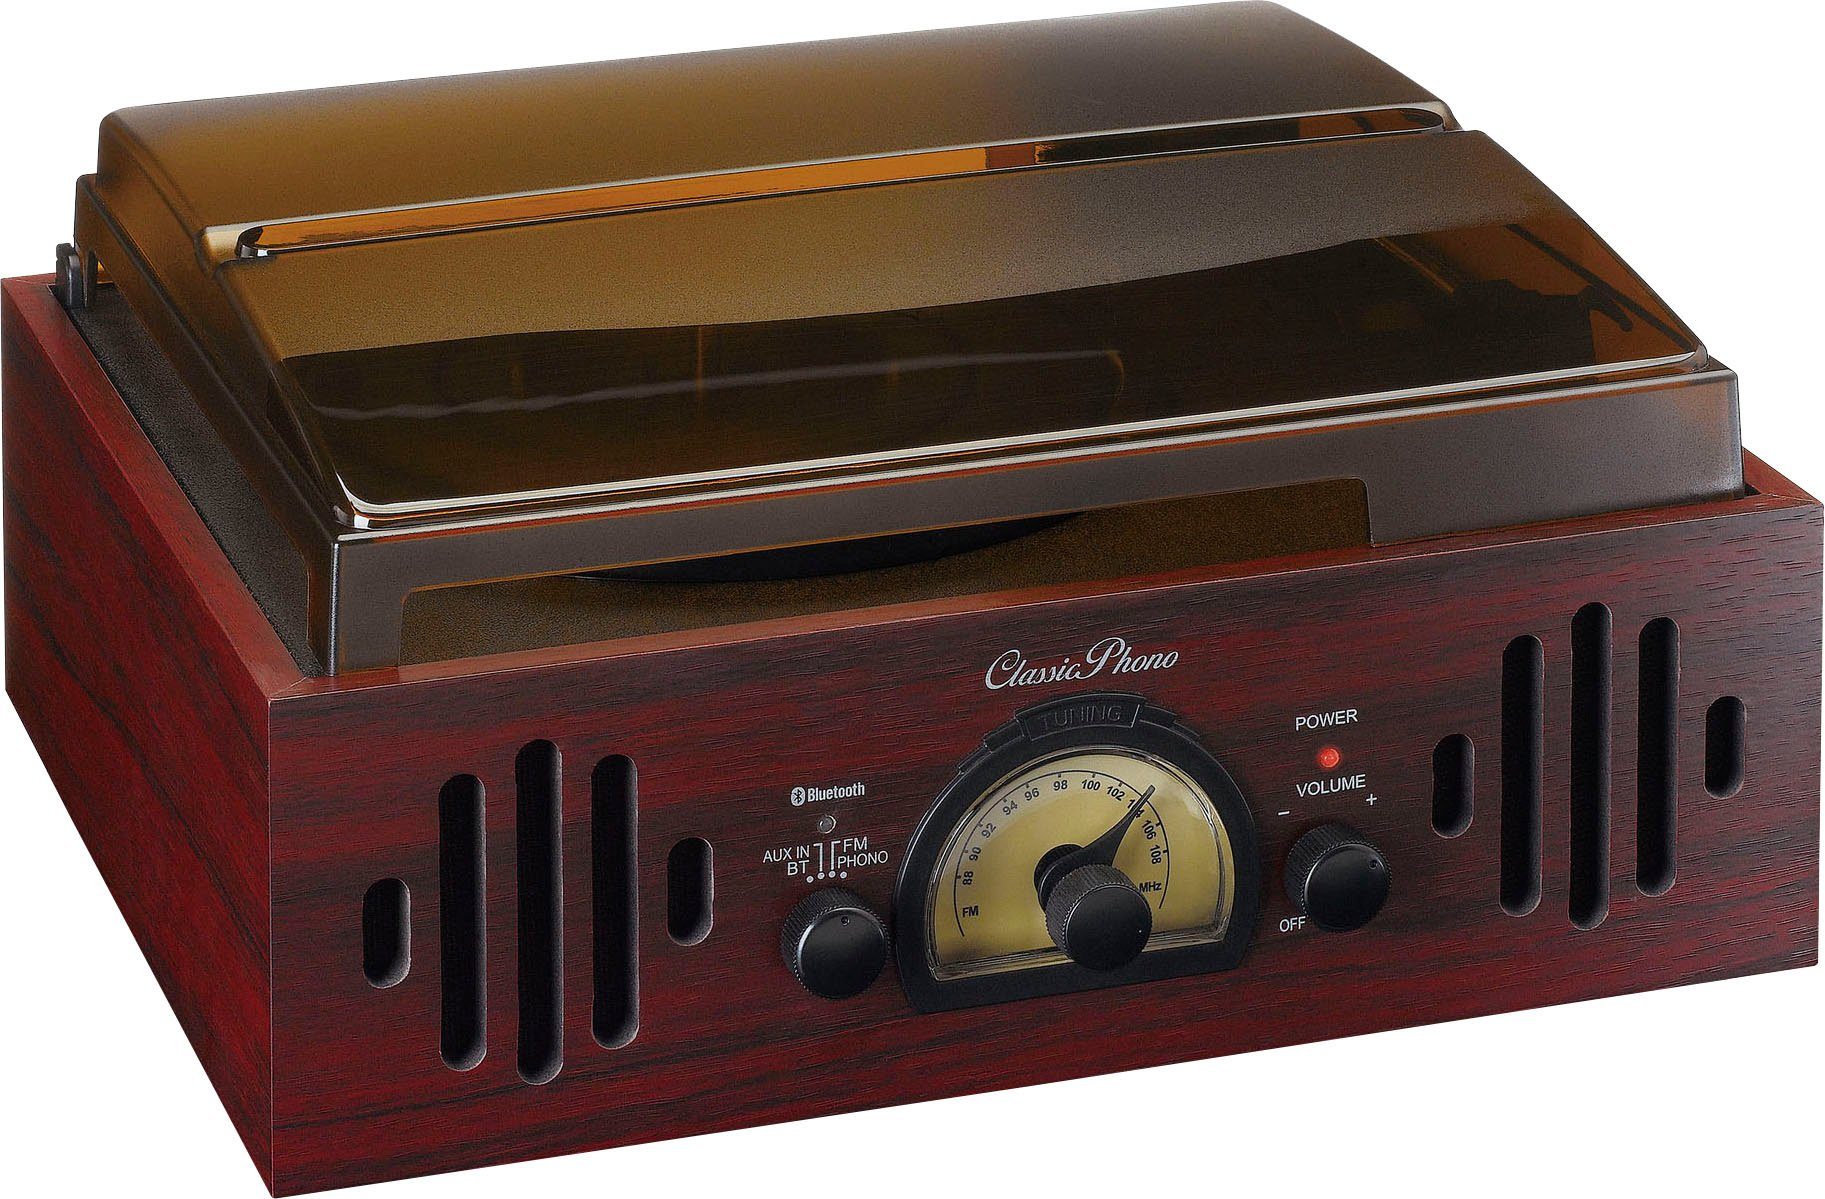 Radio Plattenspieler Retro mit Phono Riemenantrieb), TT-43WA Riemenantrieb, Classic und Lenco - Plattenspieler ( Bluetooth-Funktion Plattenspieler